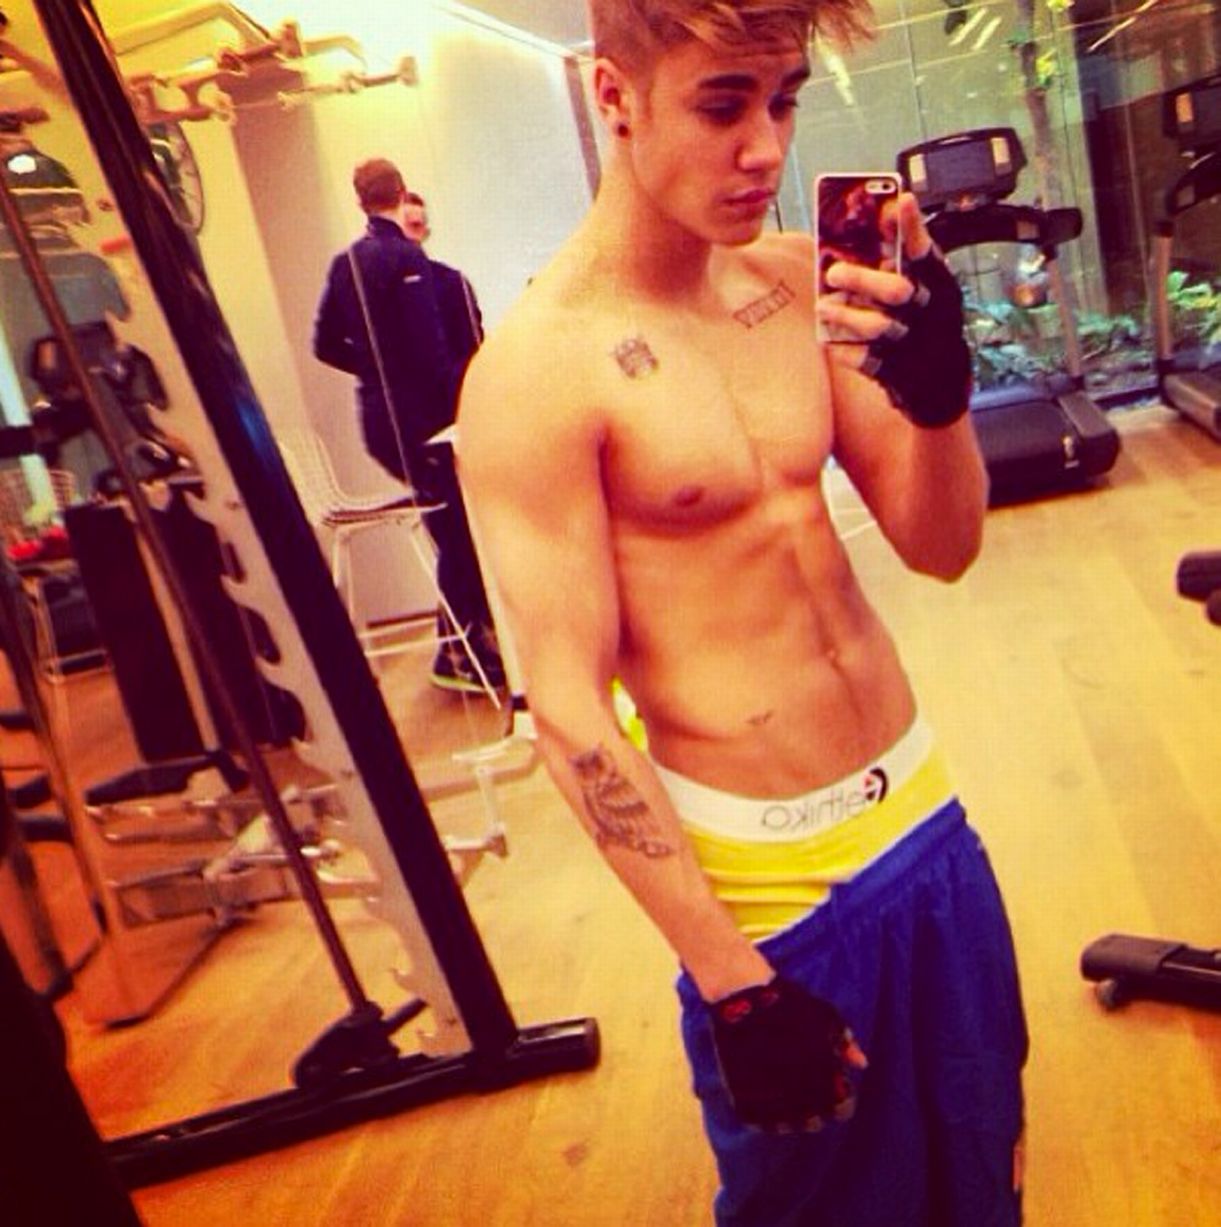 STRENGTH FIGHTERâ„¢: Justin Bieber workout